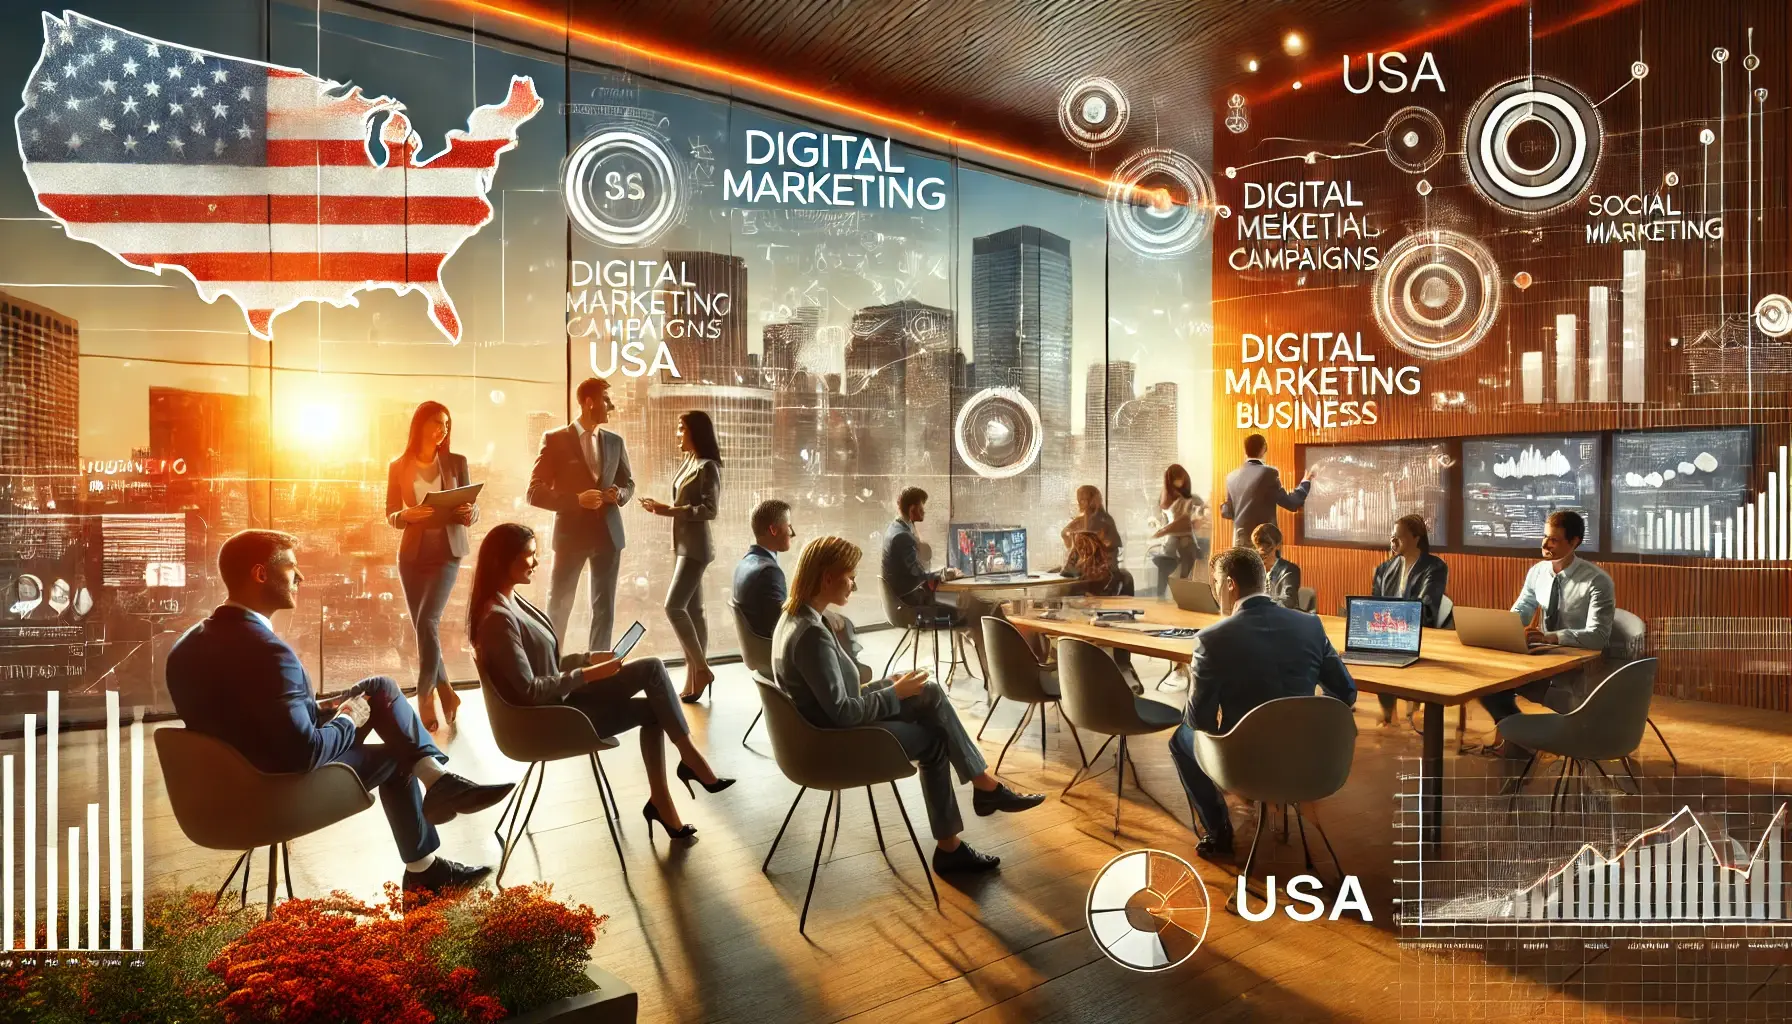 Digital Marketing Business: Transforming the USA's Business Landscape